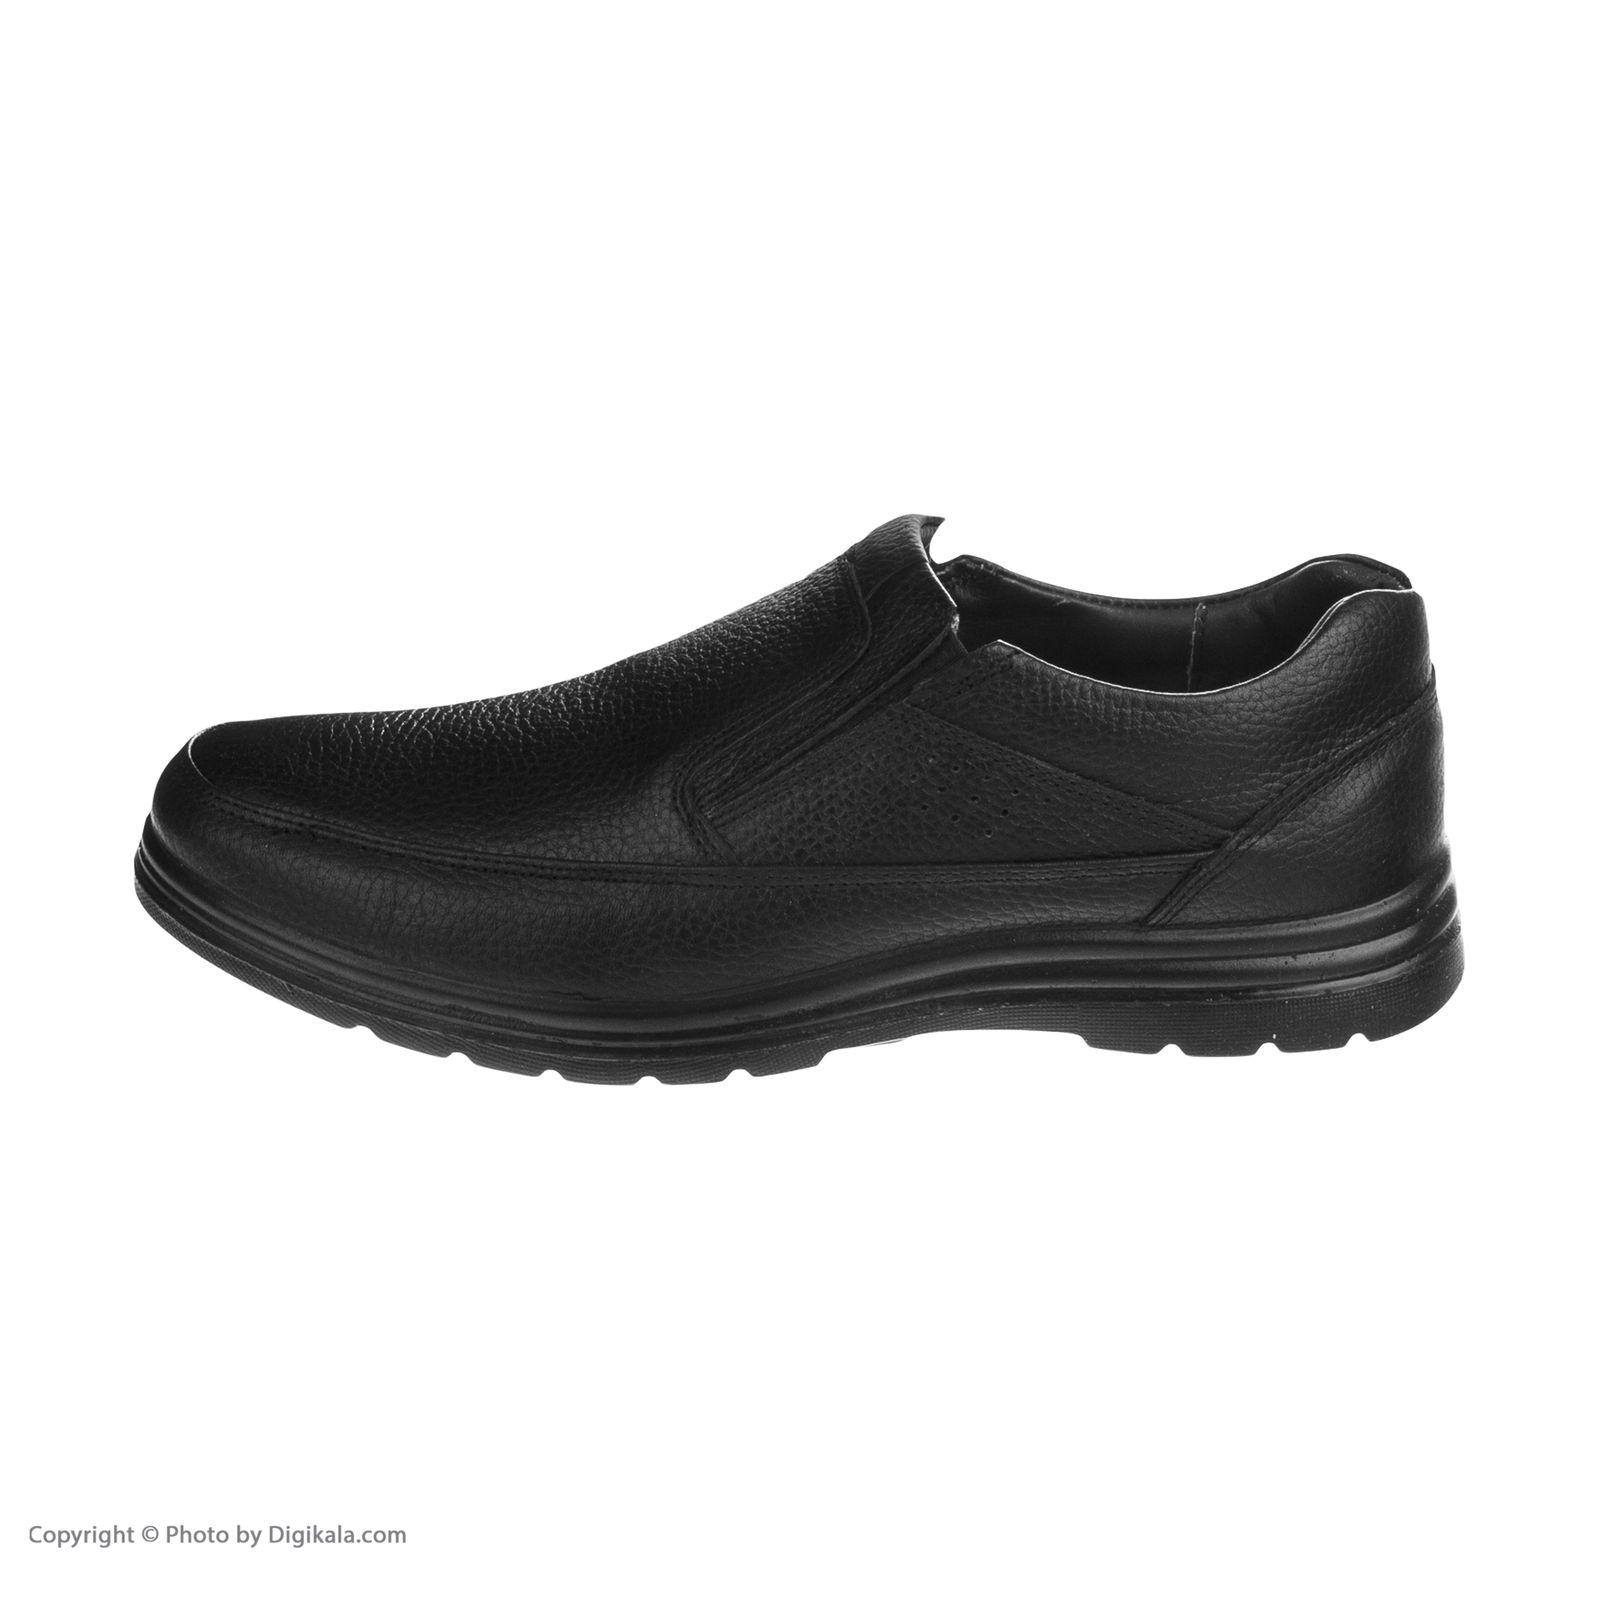 کفش روزمره مردانه شیفر مدل 7237a503101 - مشکی - 2